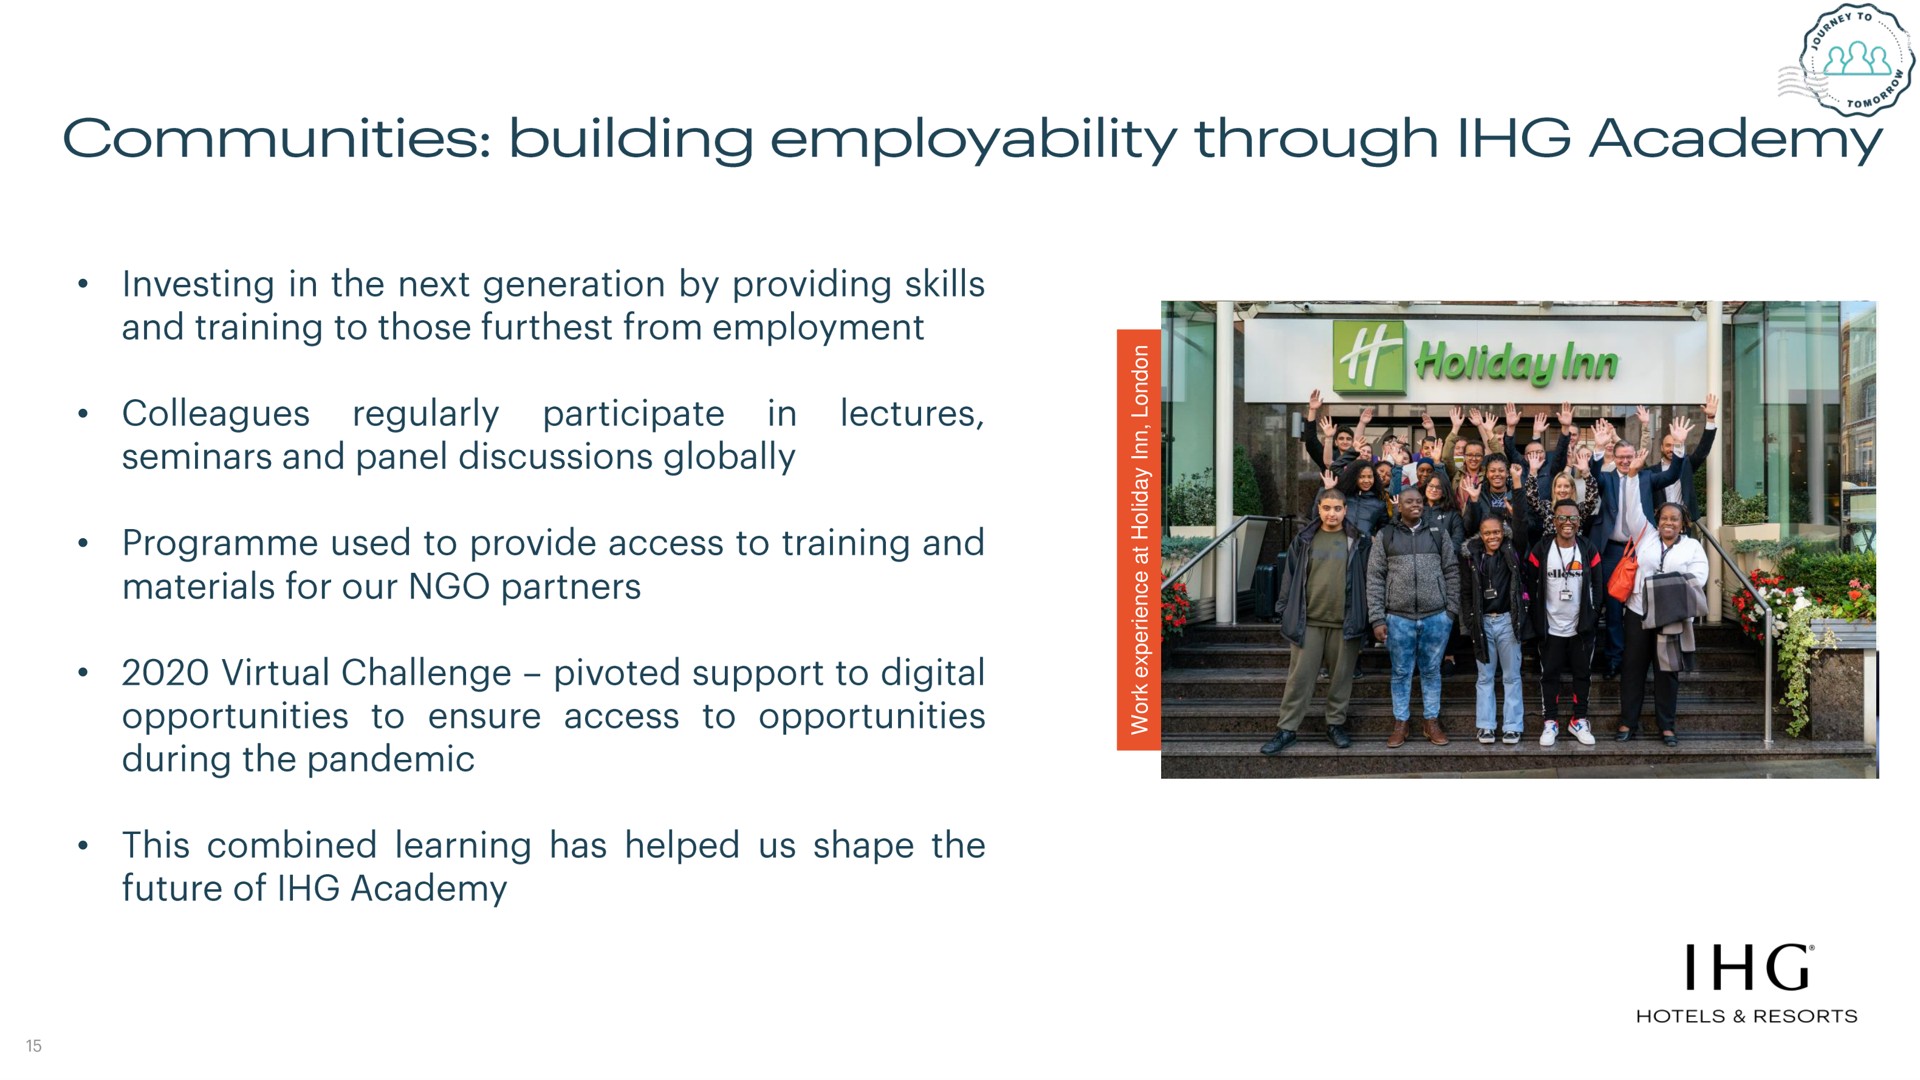 communities building employability through academy | IHG Hotels